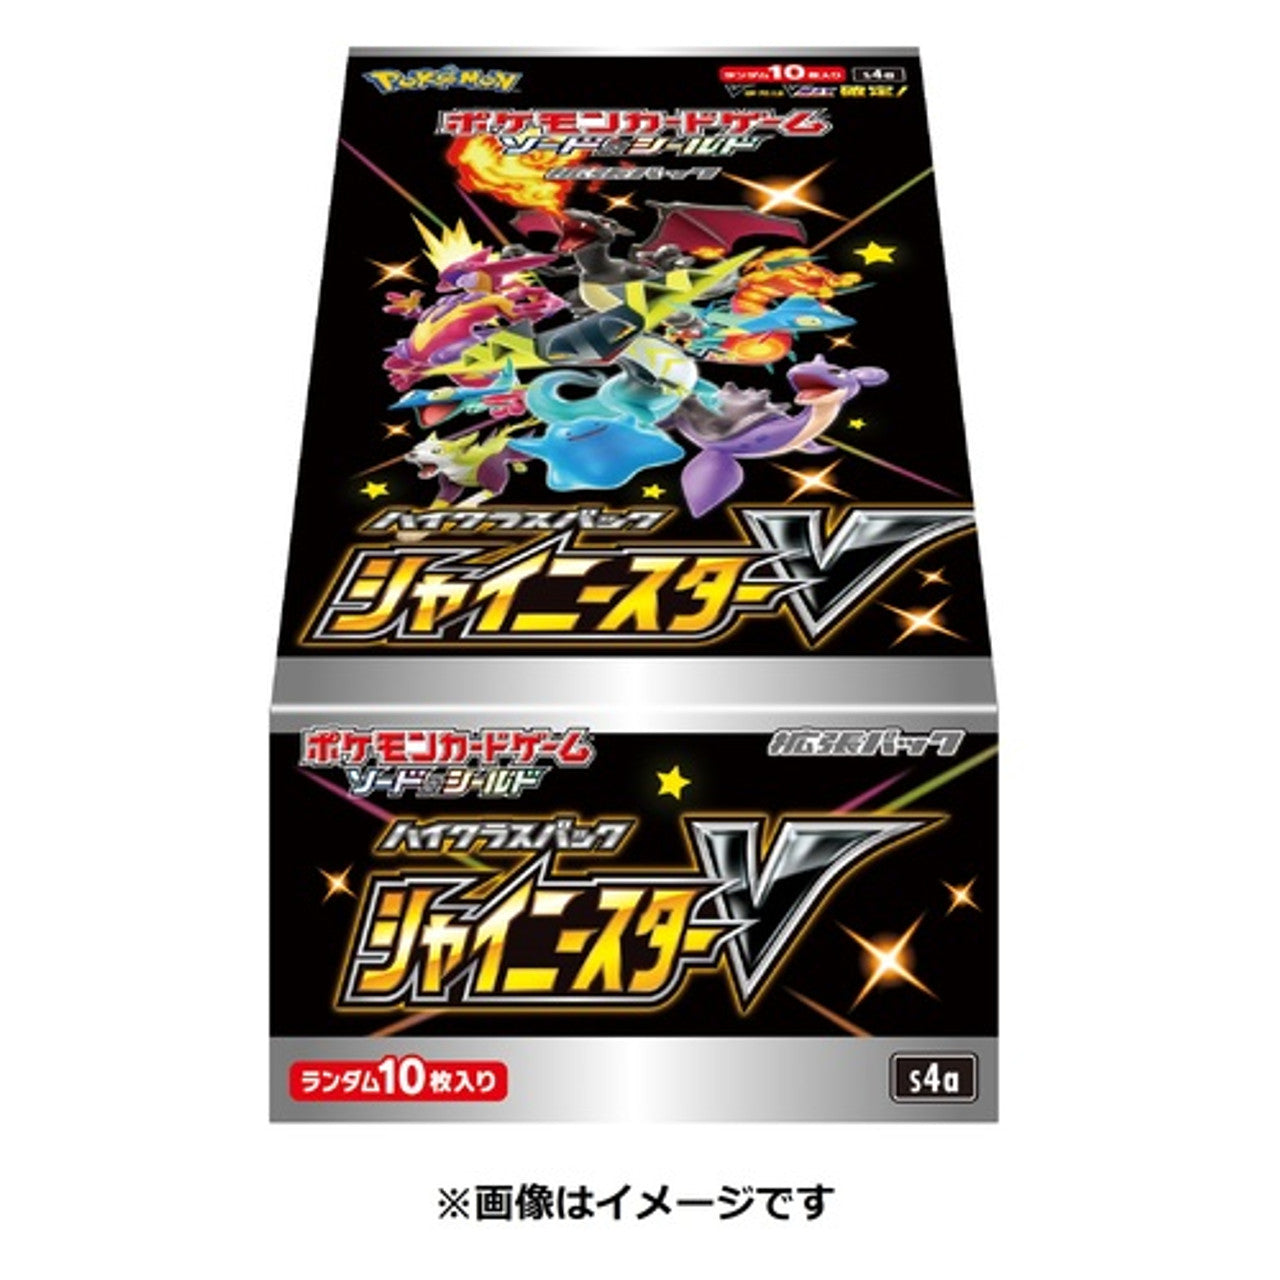 Pokemon Sword & Shield S4a High Class Pack Shiny Star V Box - Japanese